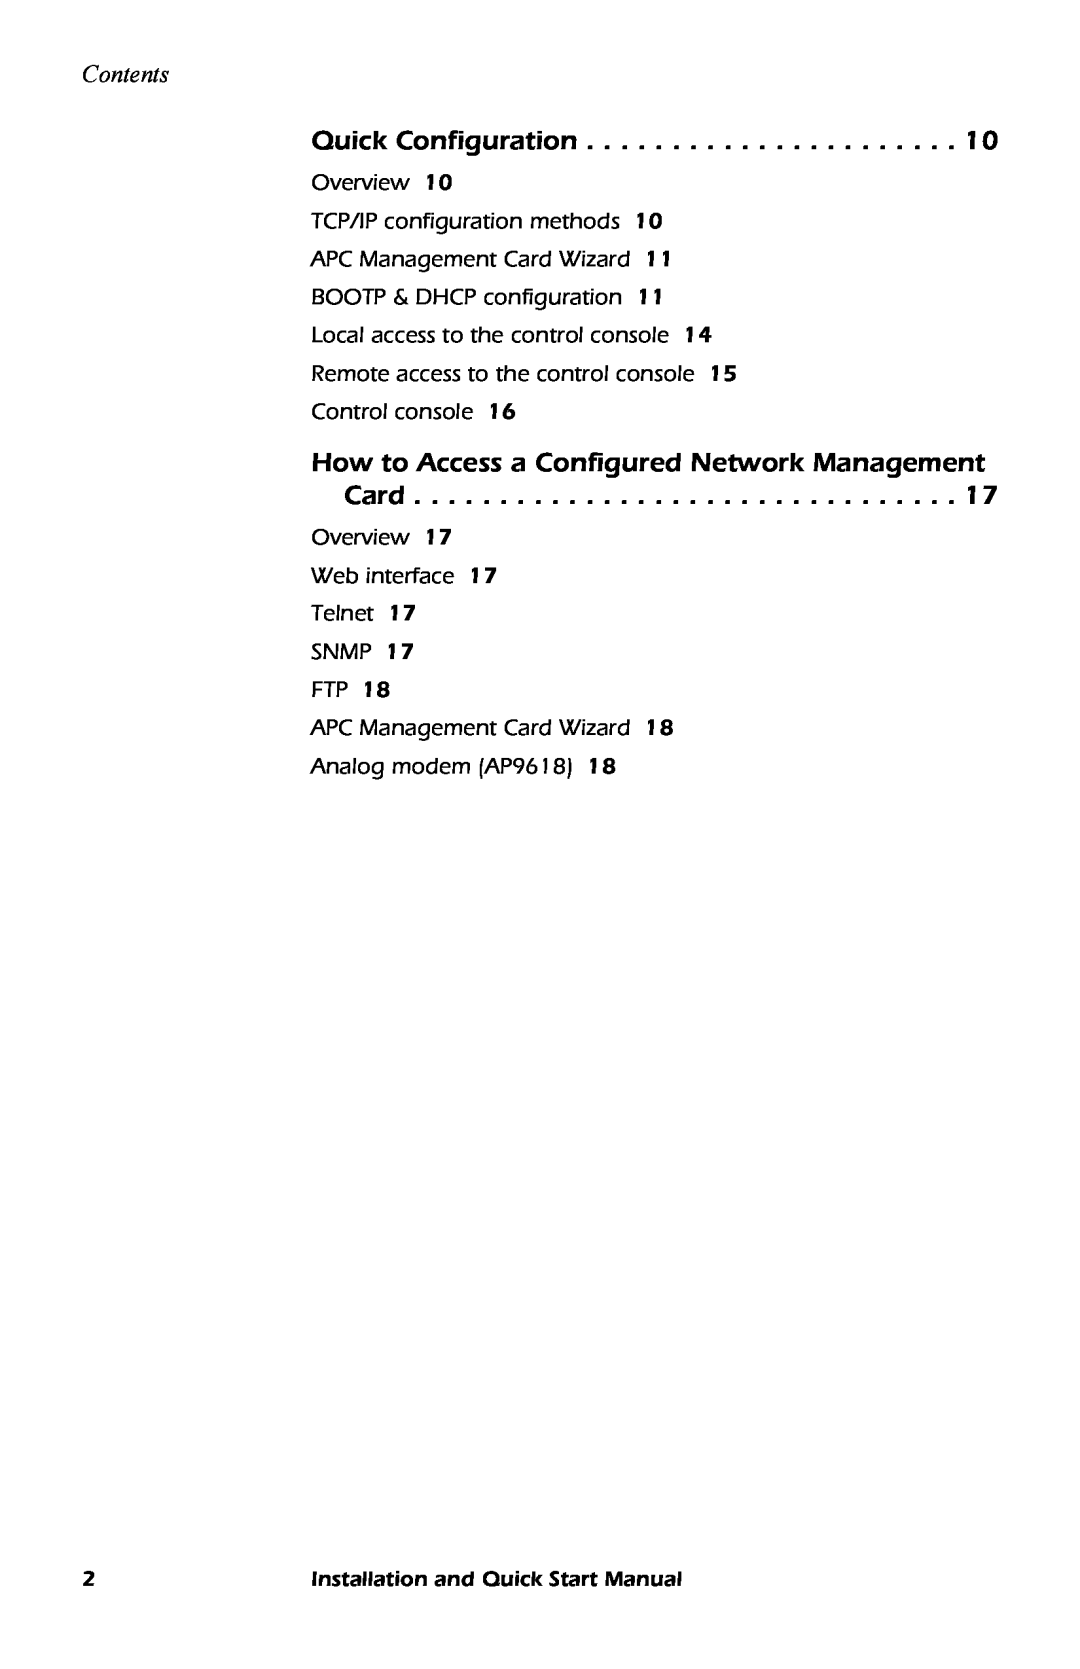 APC AP9619, AP9618 quick start manual Quick Configuration, How to Access a Configured Network Management Card, Contents 